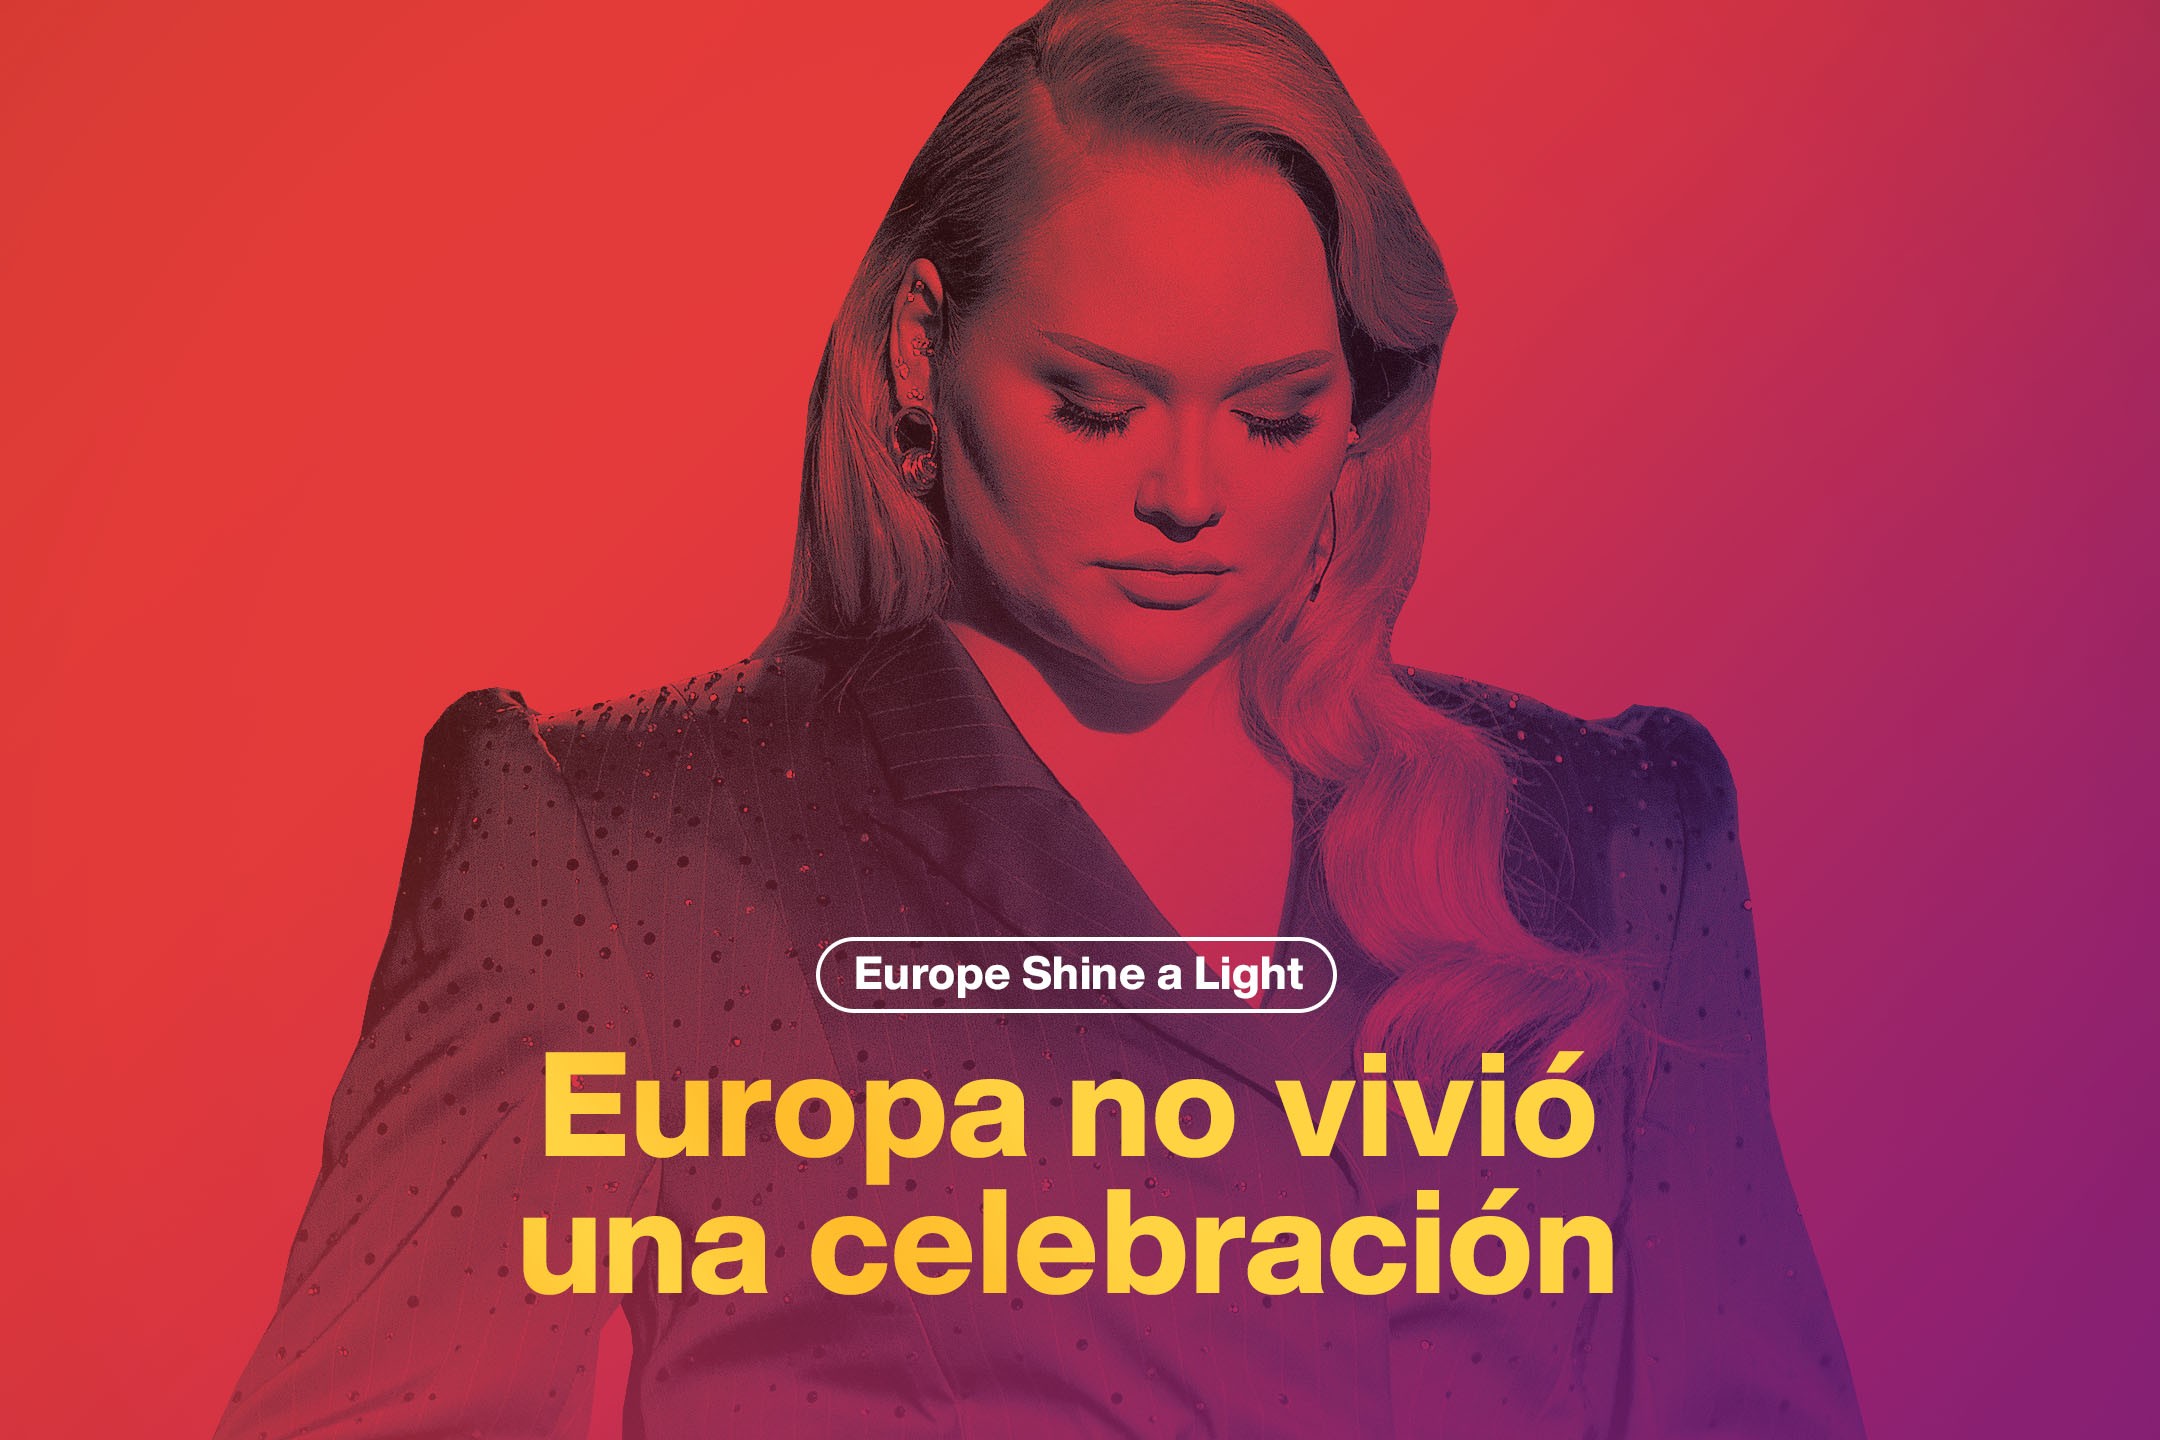 eurovision europe shine a light